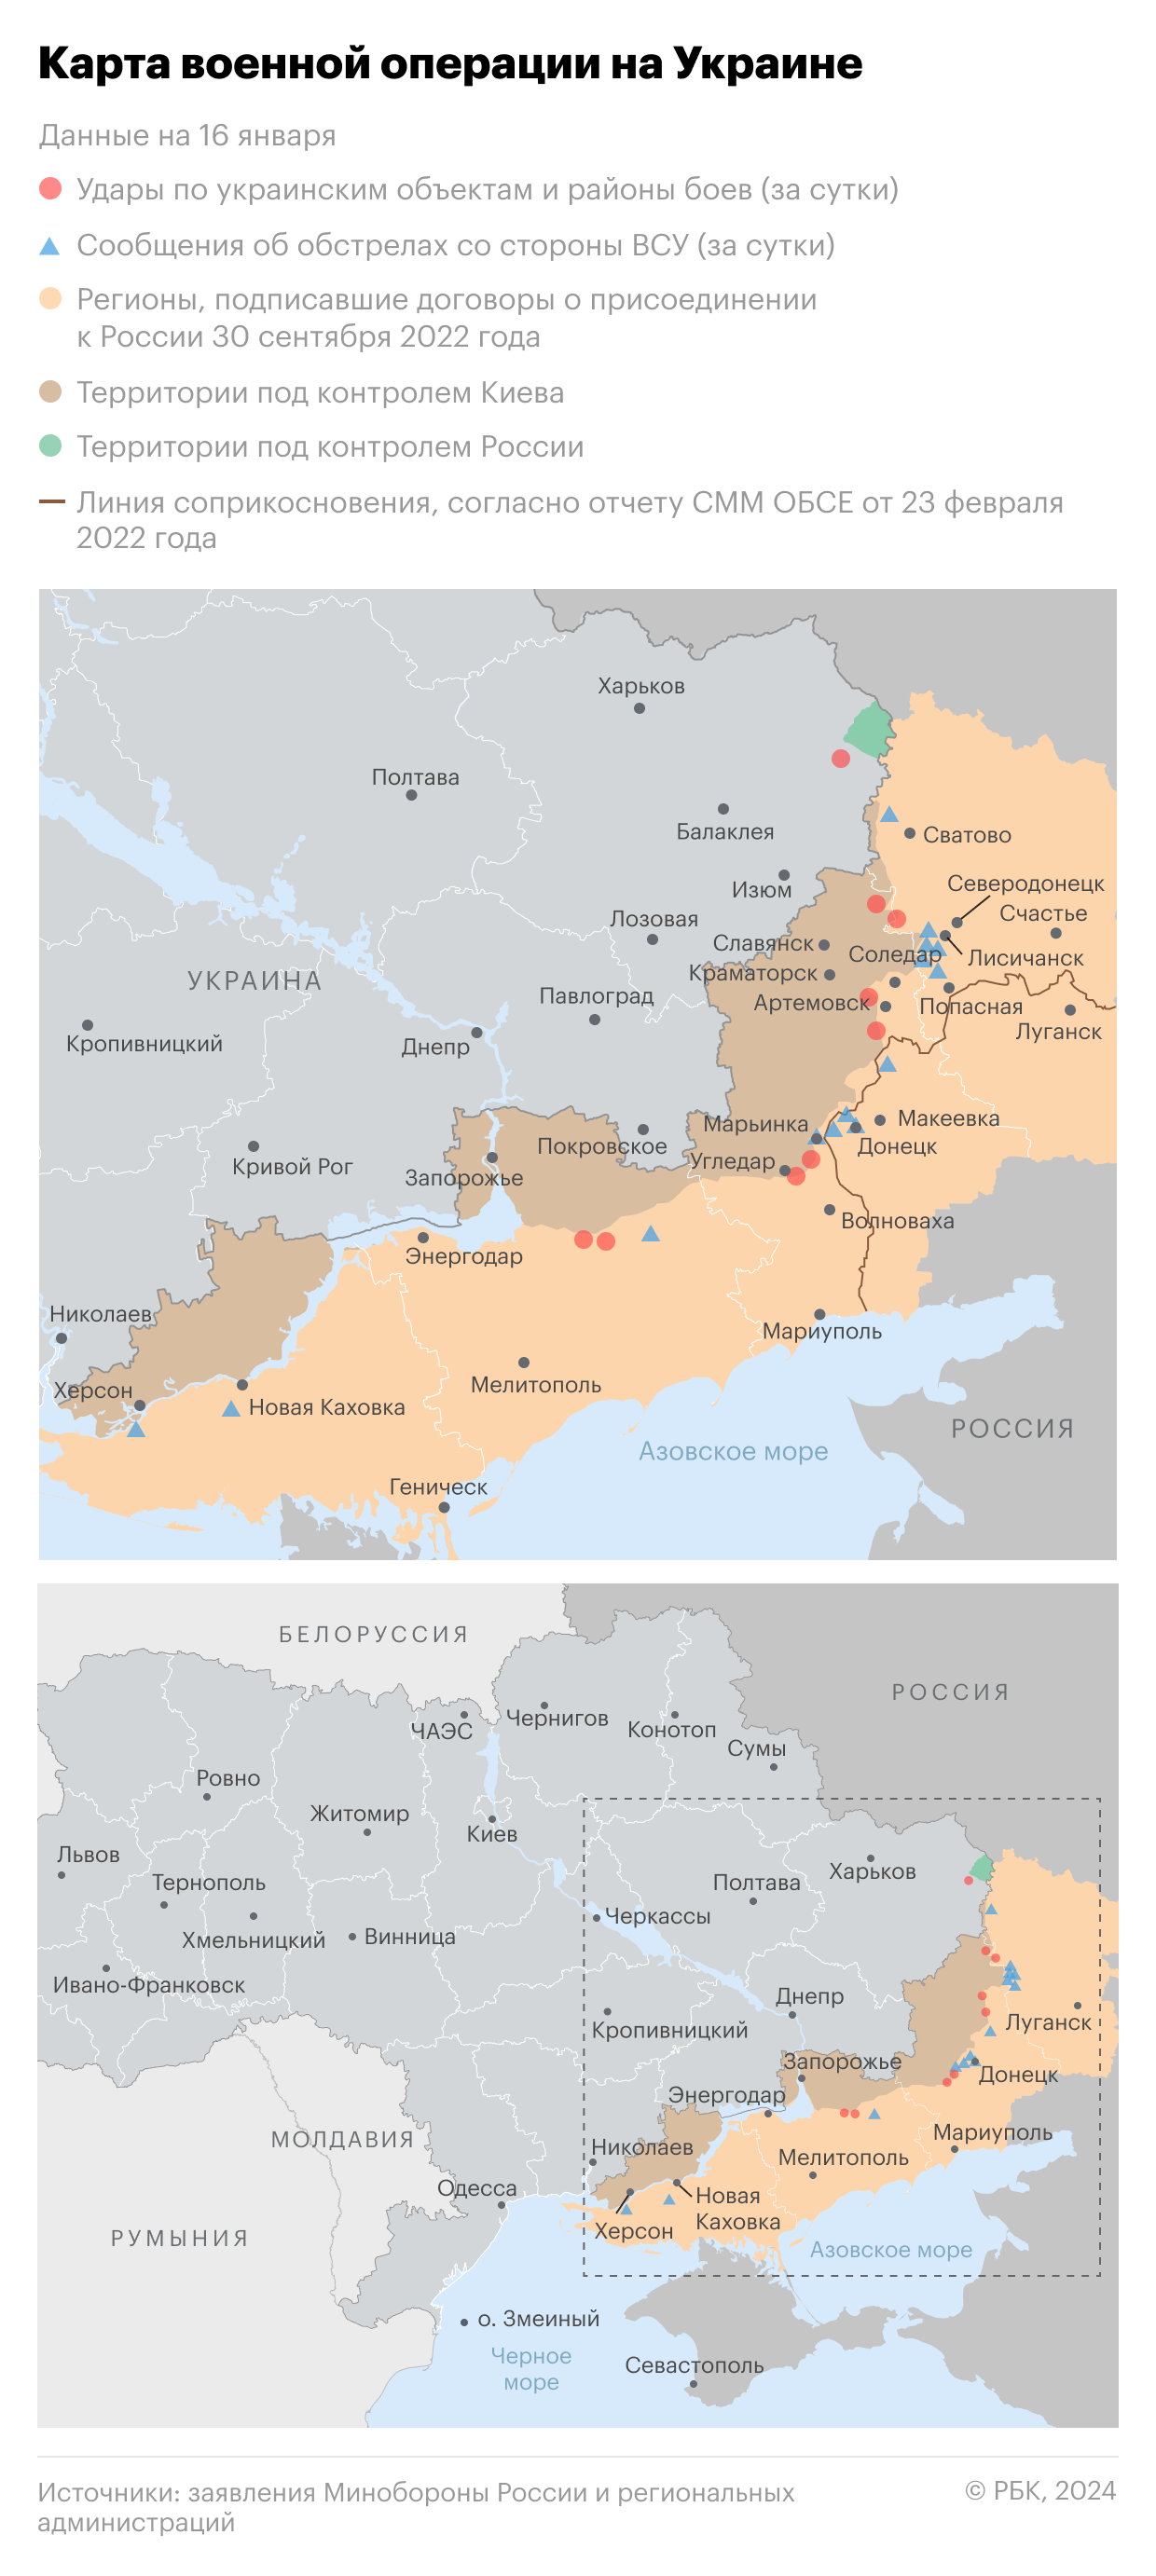 Военная операция на Украине. Карта на 16 января